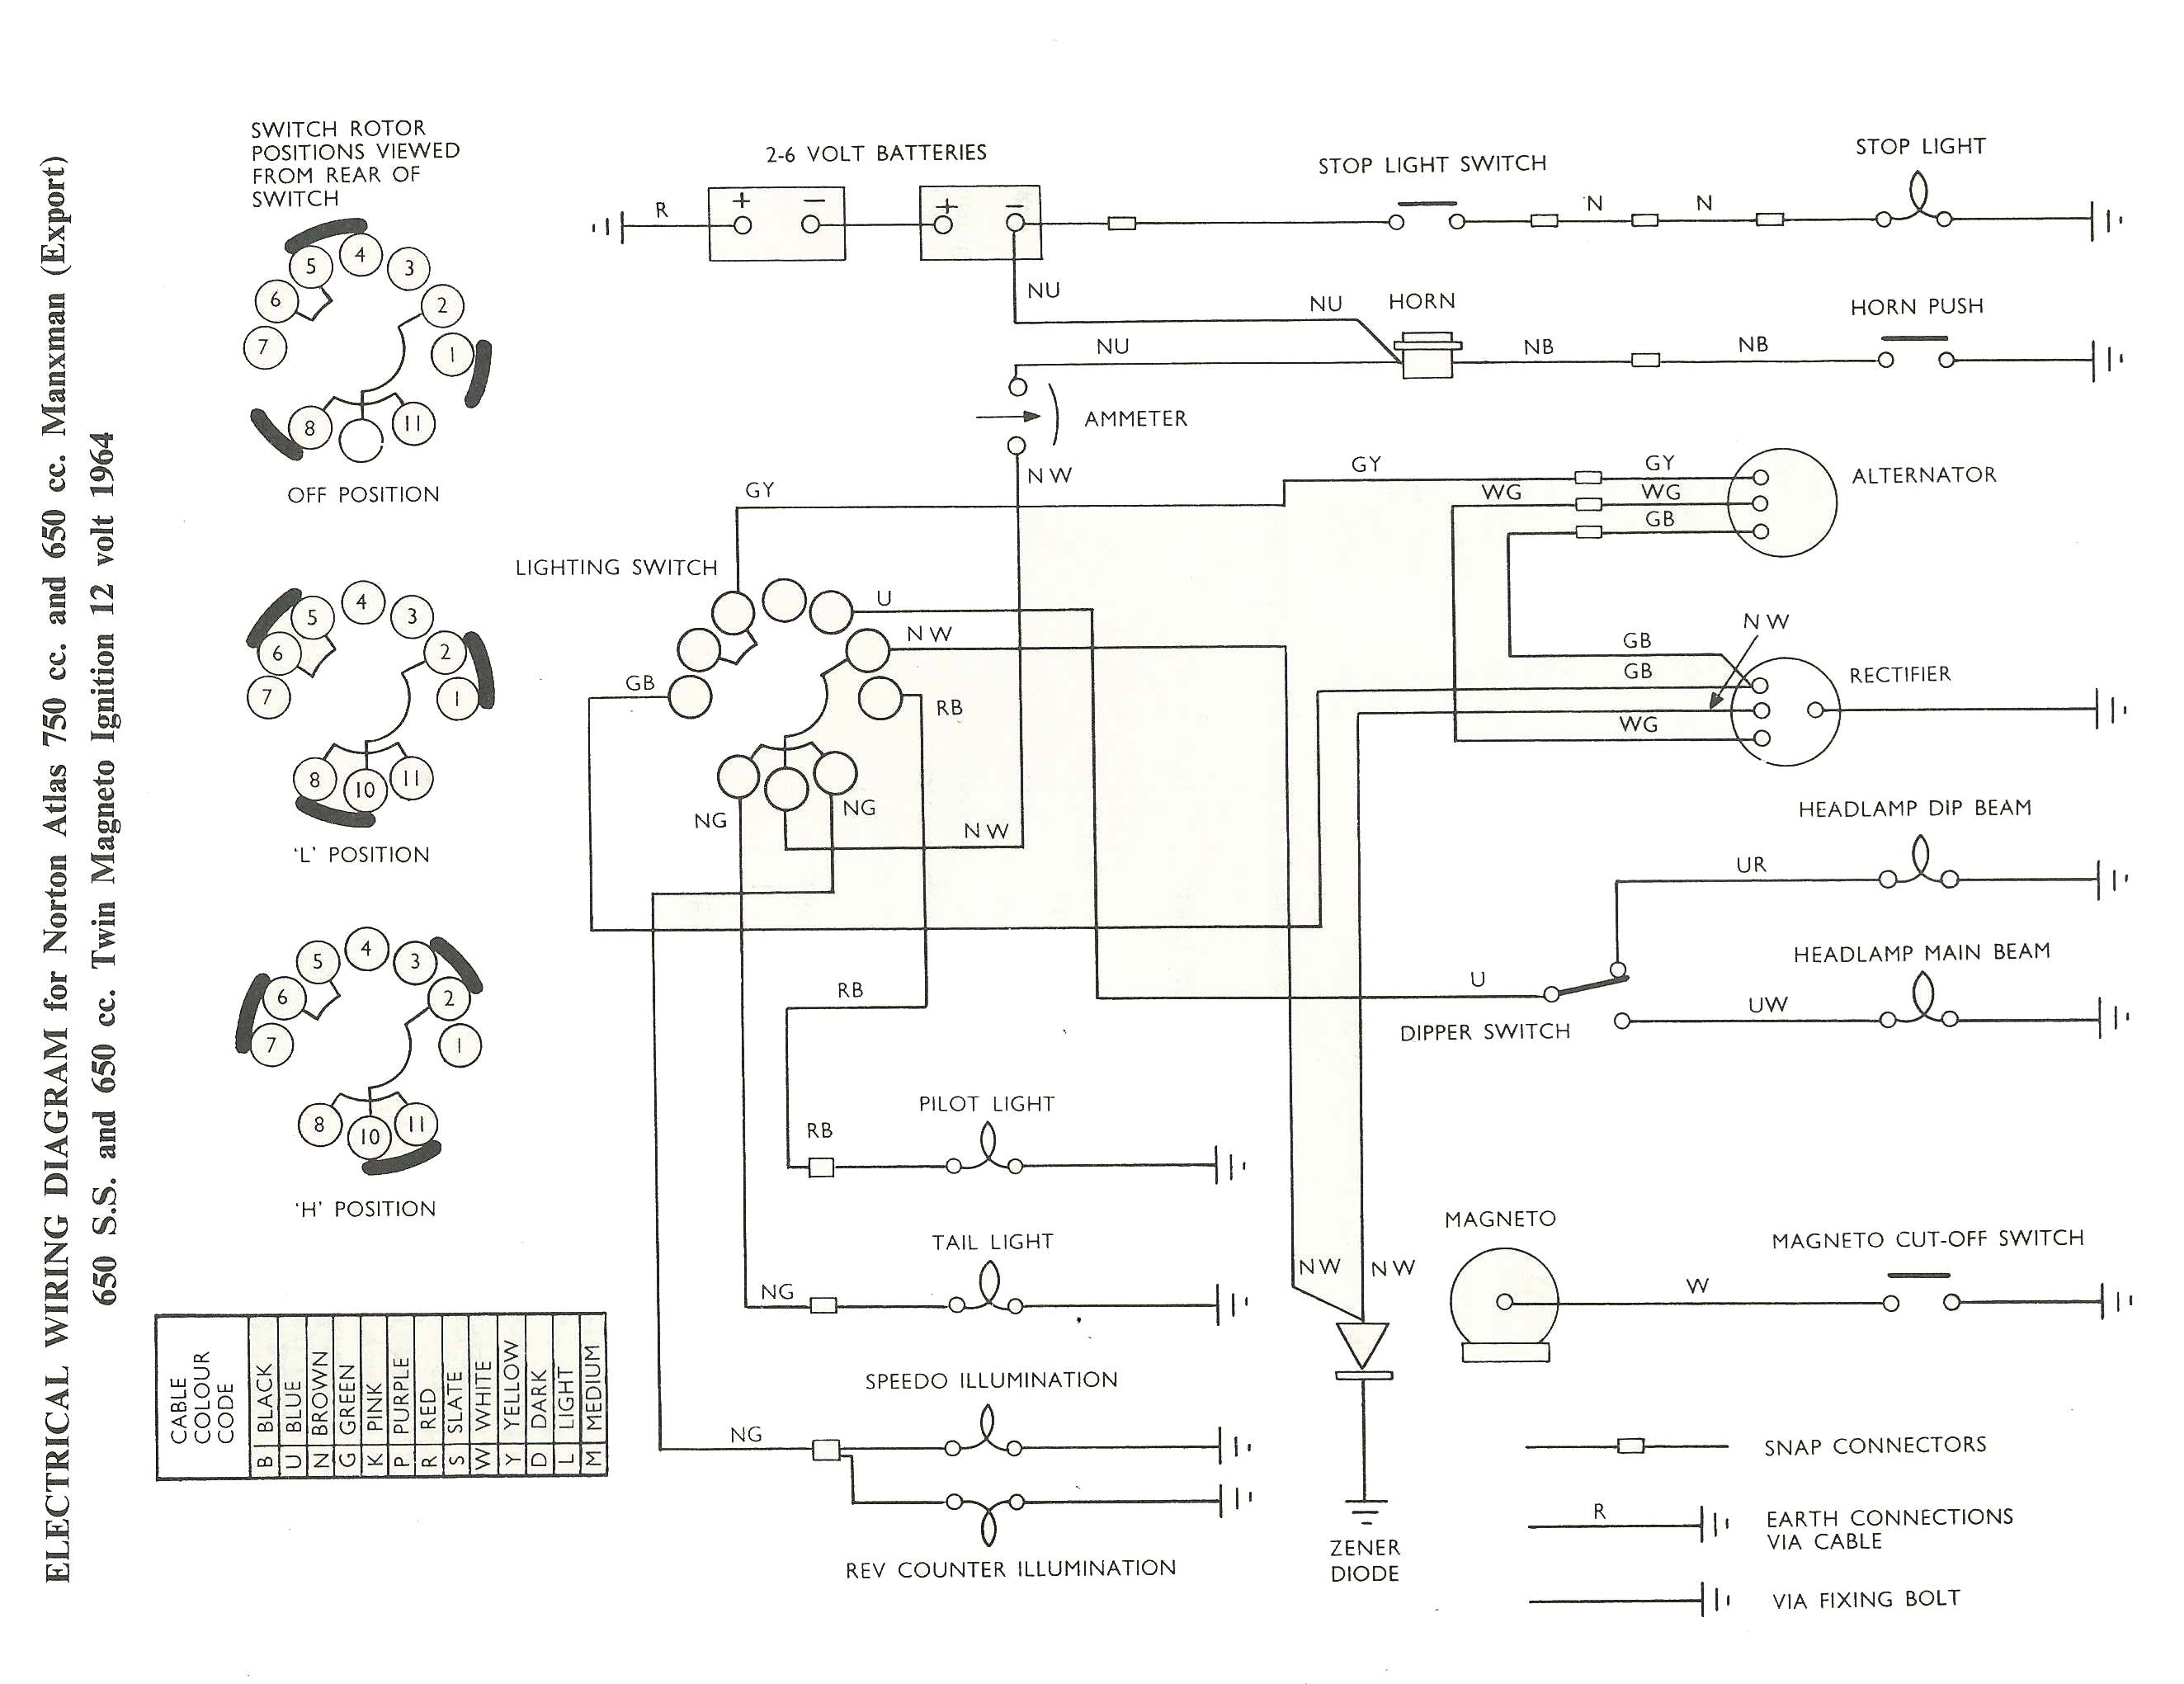 1966 royal enfield wiring diagram